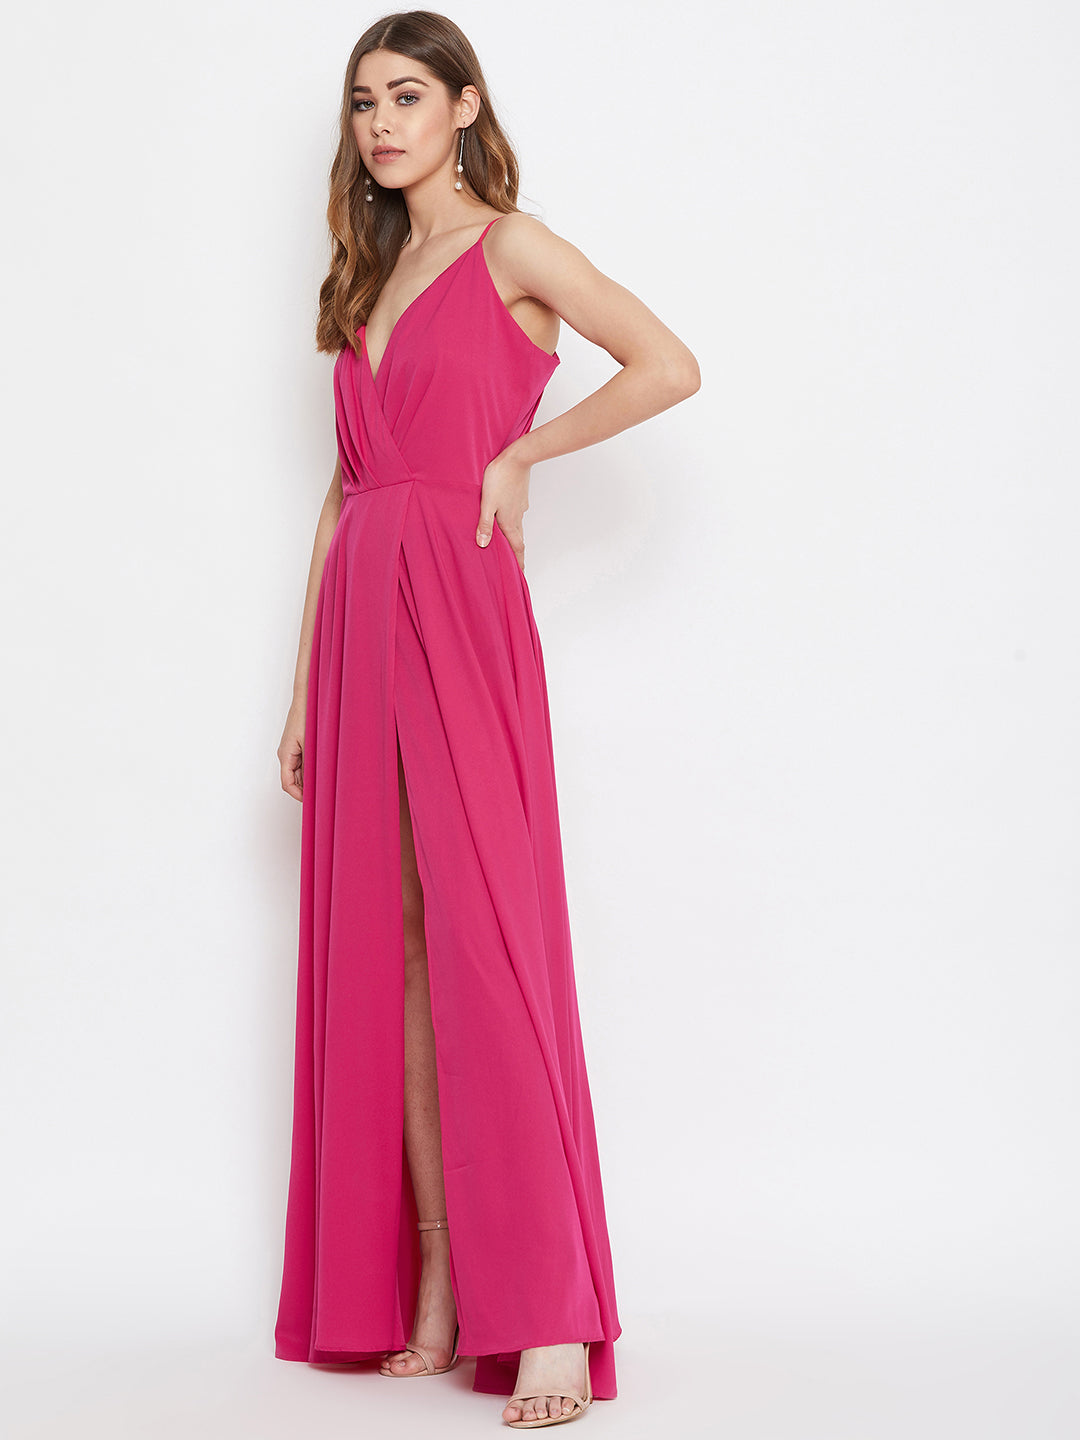 Berrylush Women Solid Pink V-Neck Sleeveless Pleated Maxi Dress